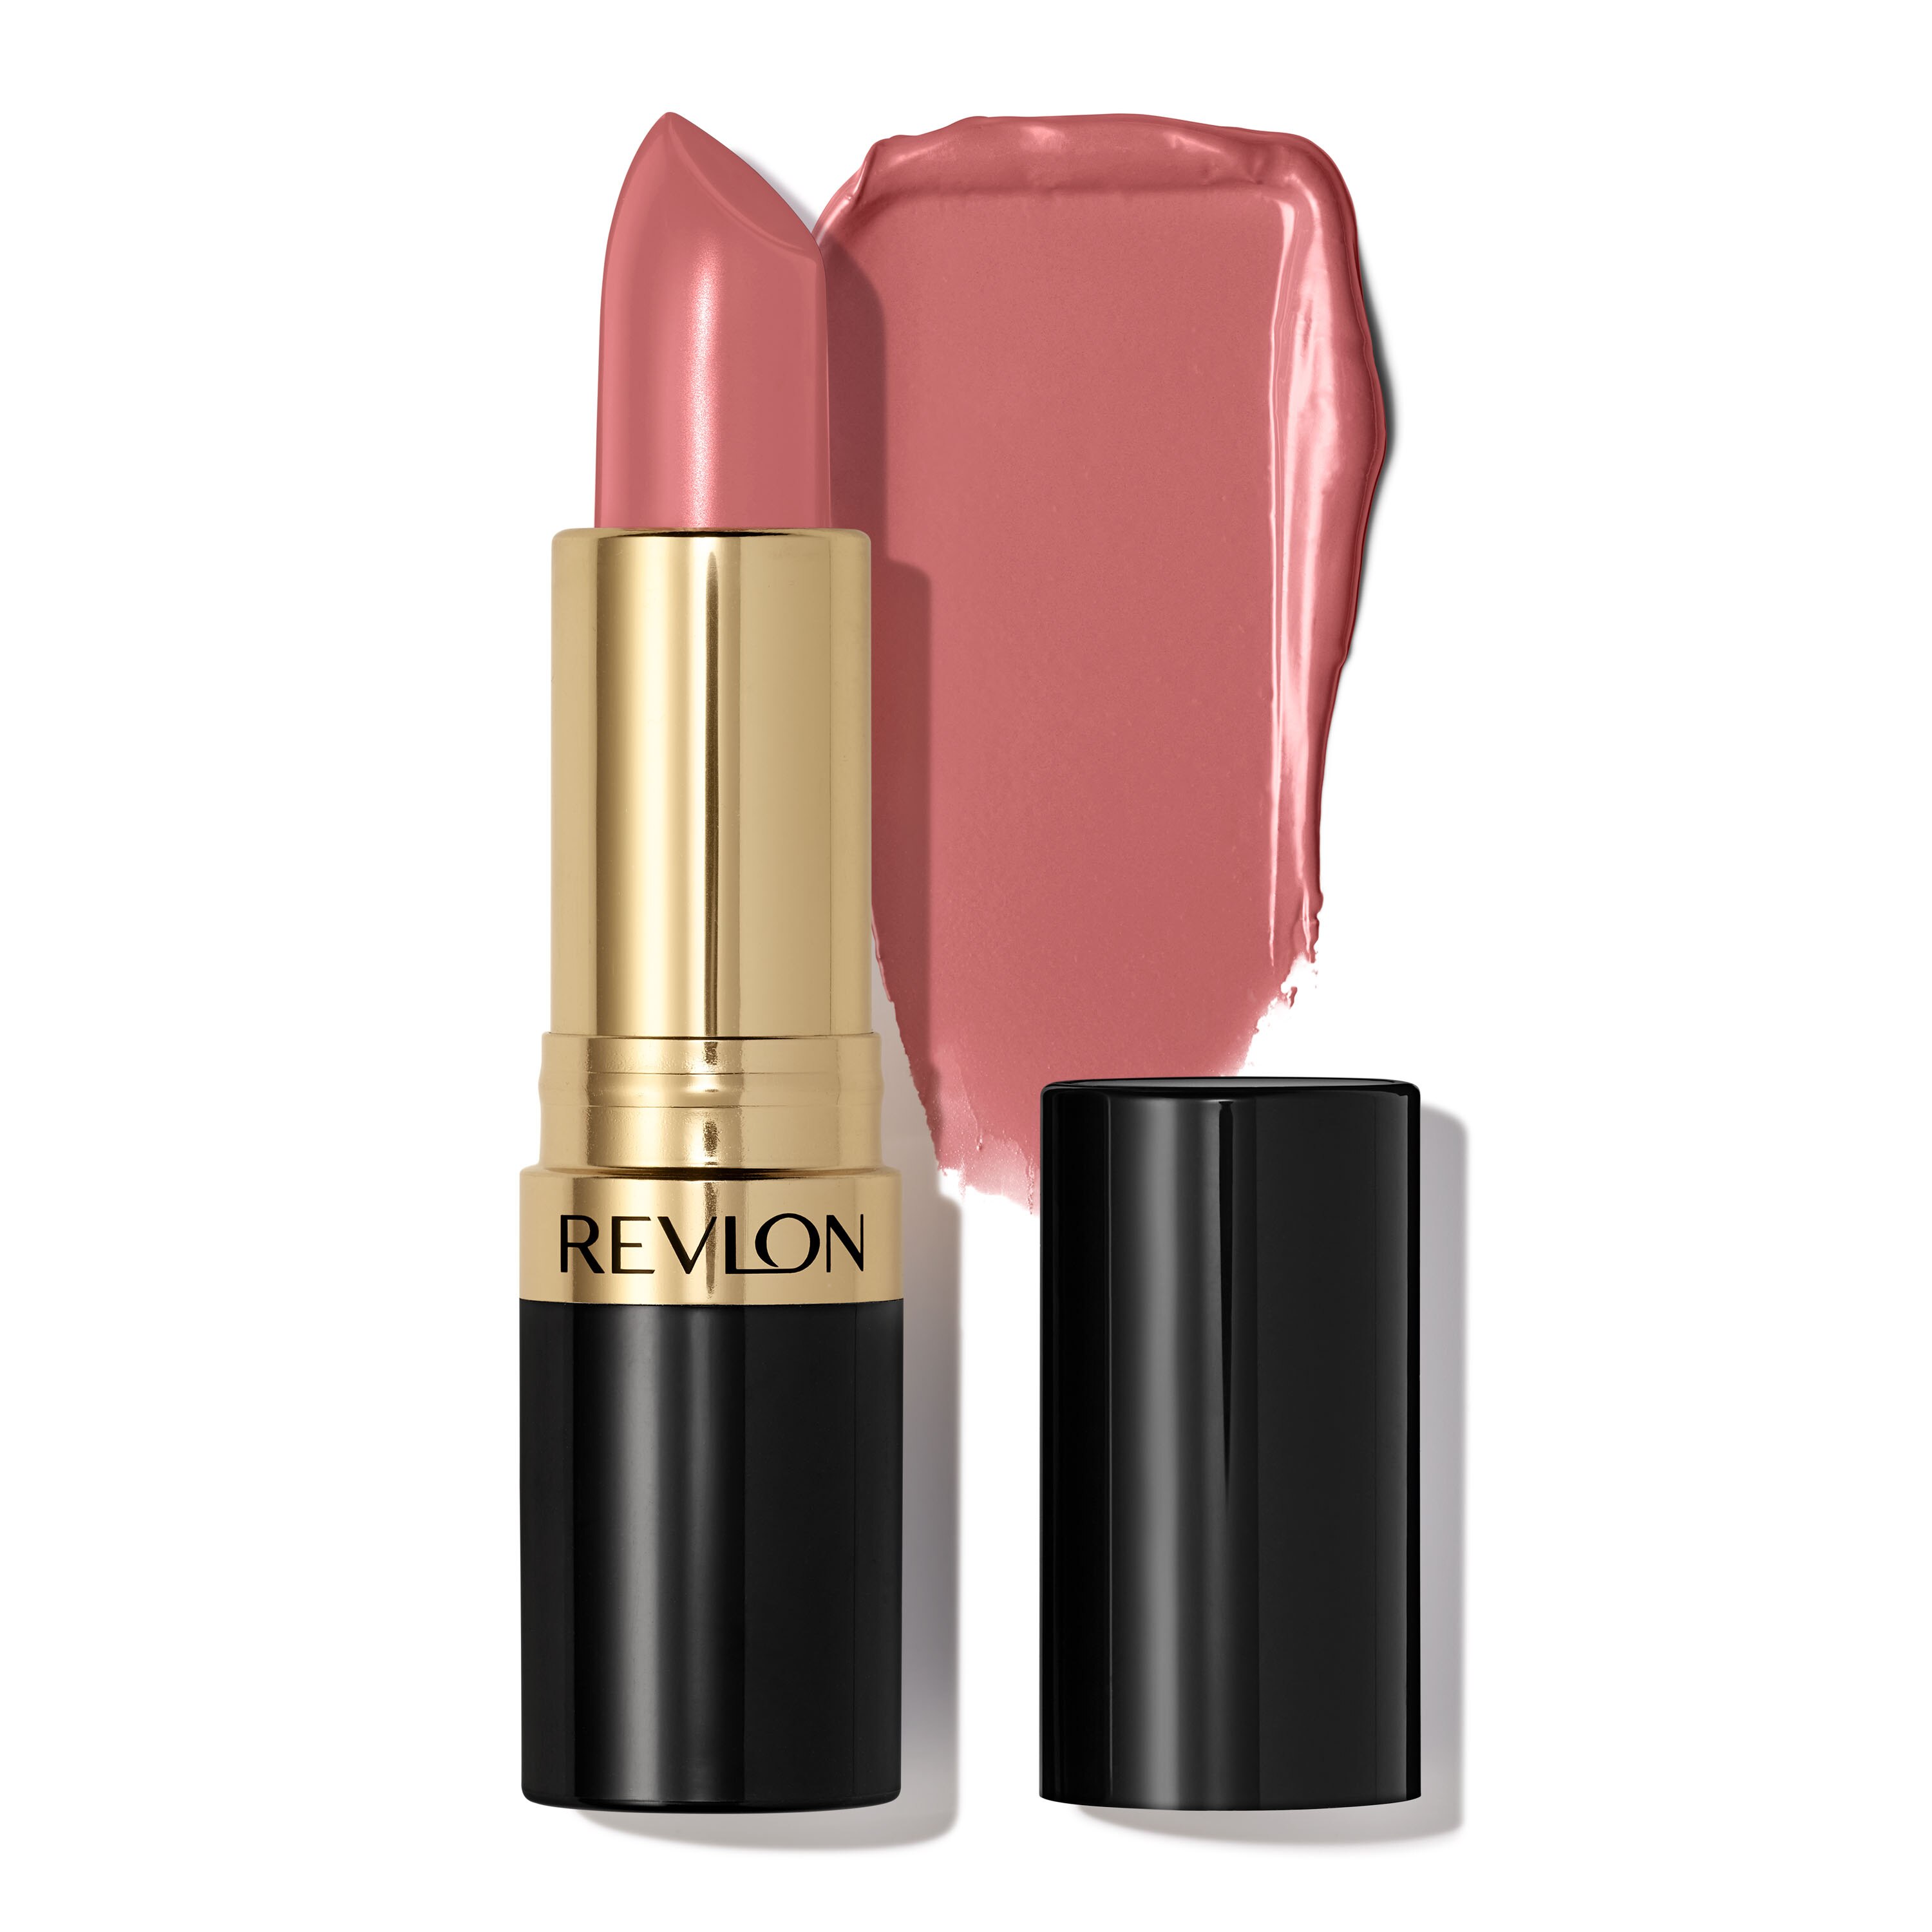 Revlon Super Lustrous Lipstick With Vitamin E And Avocado Oil, Cream Lipstick In Pink, Flushed - 0.15 Oz , CVS